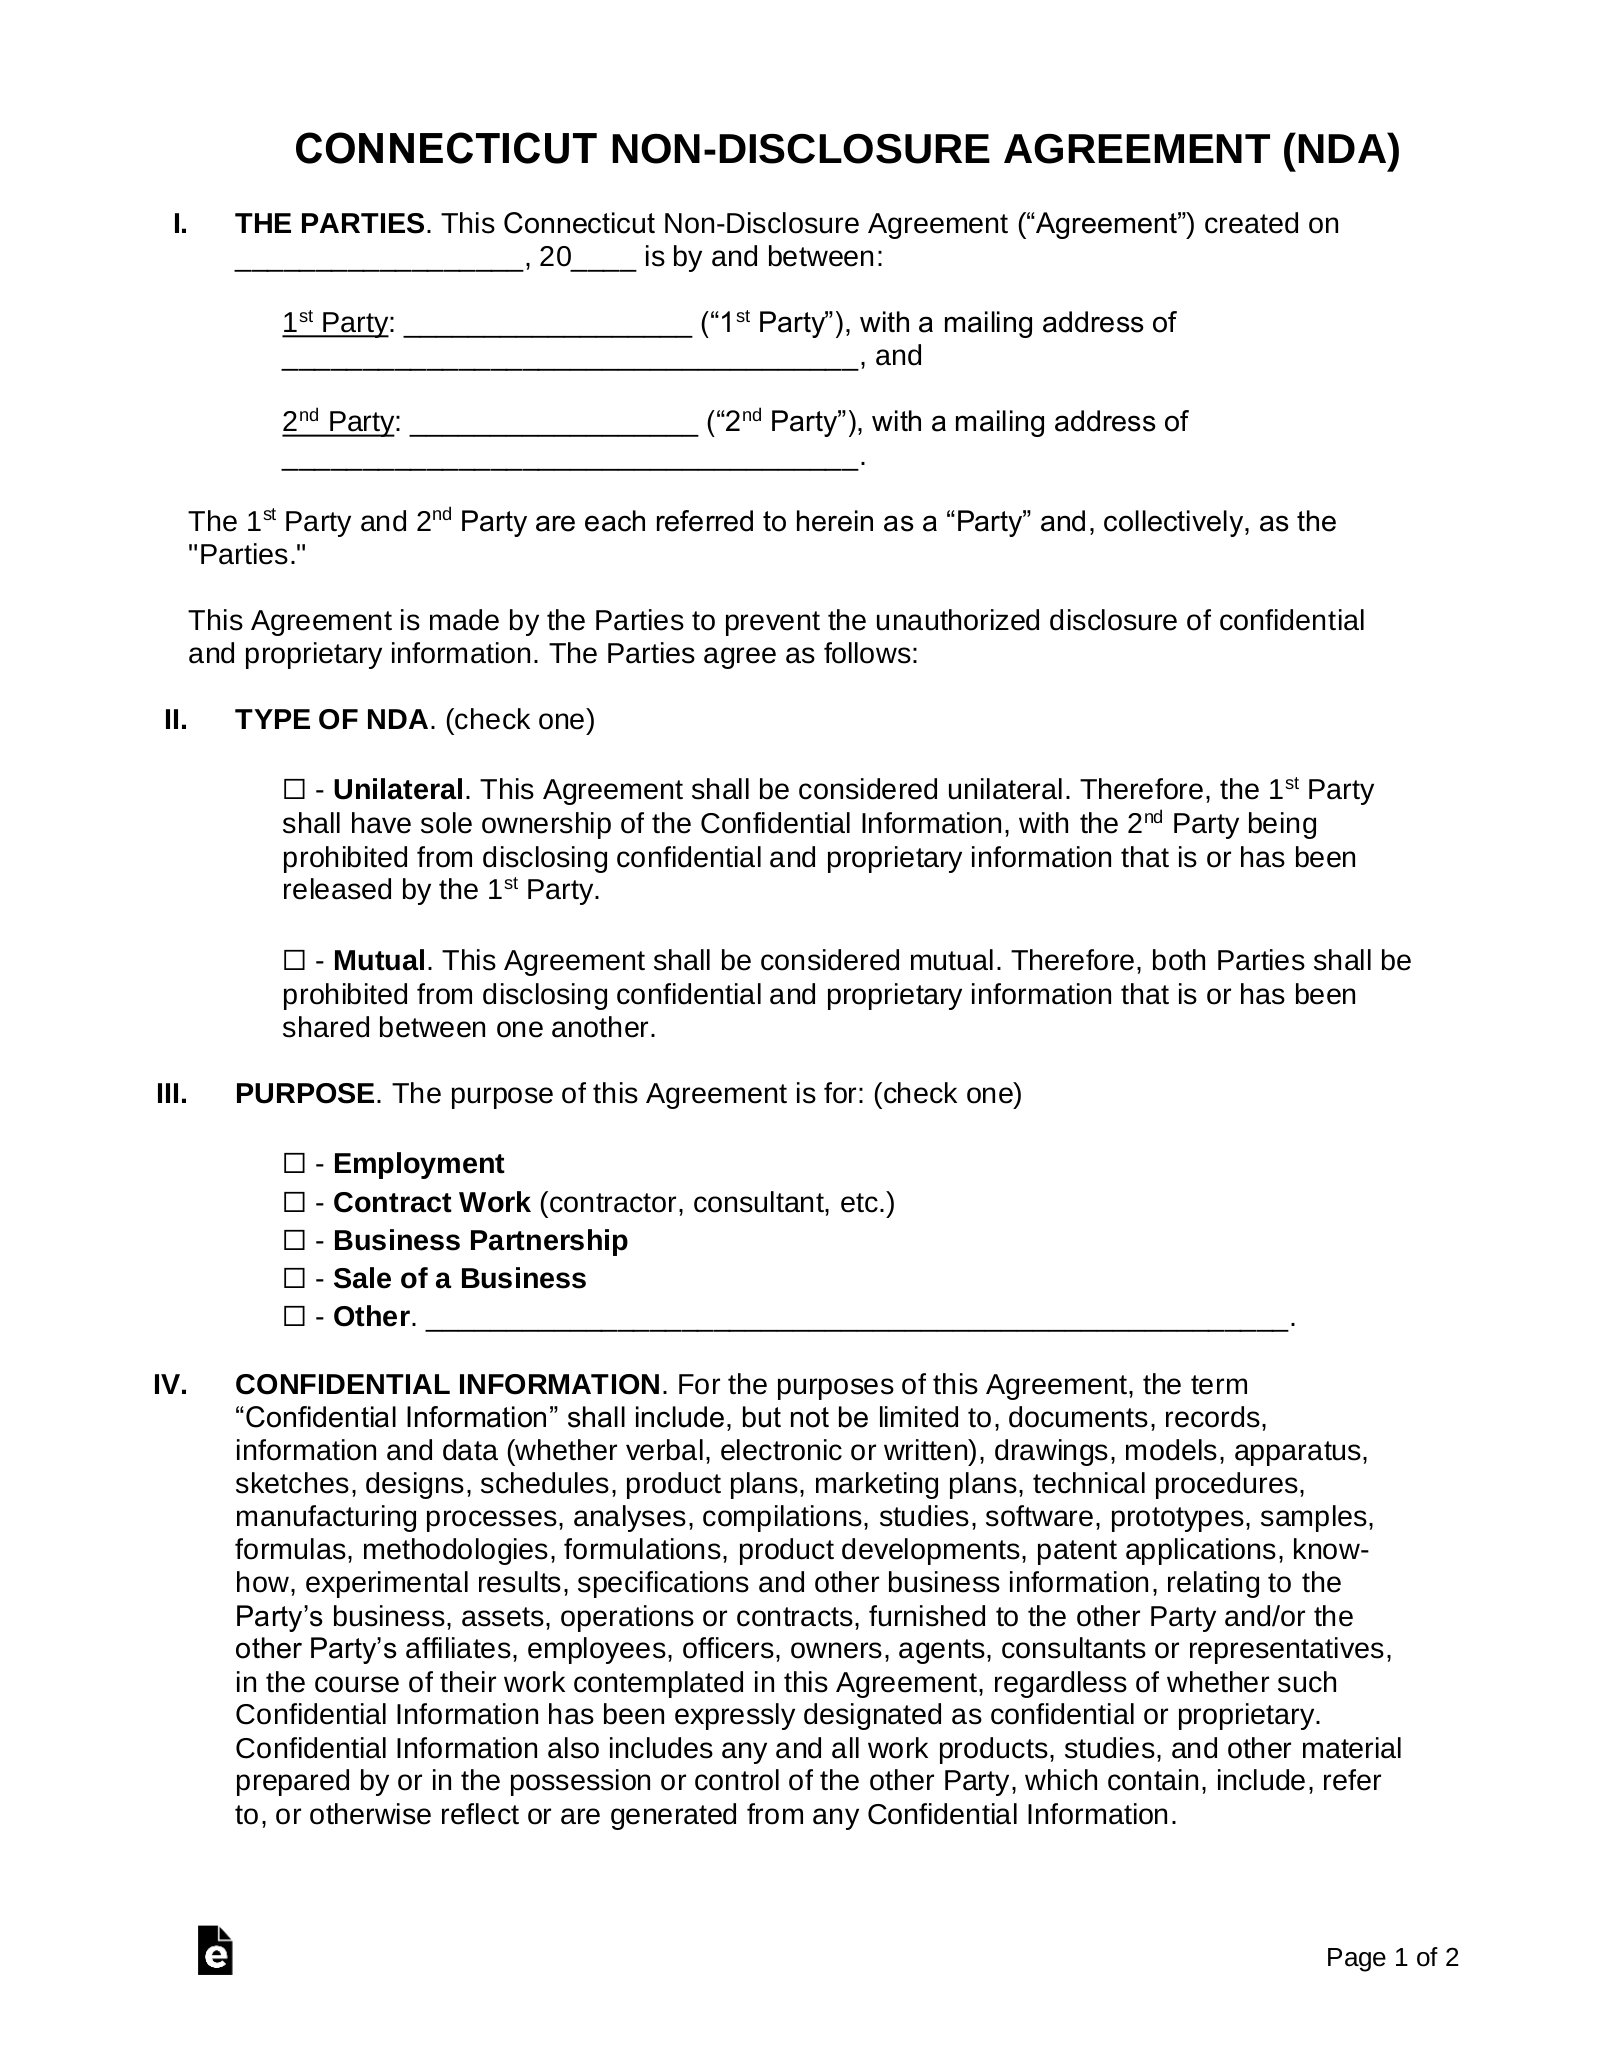 Connecticut Non-Disclosure Agreement (NDA) Template